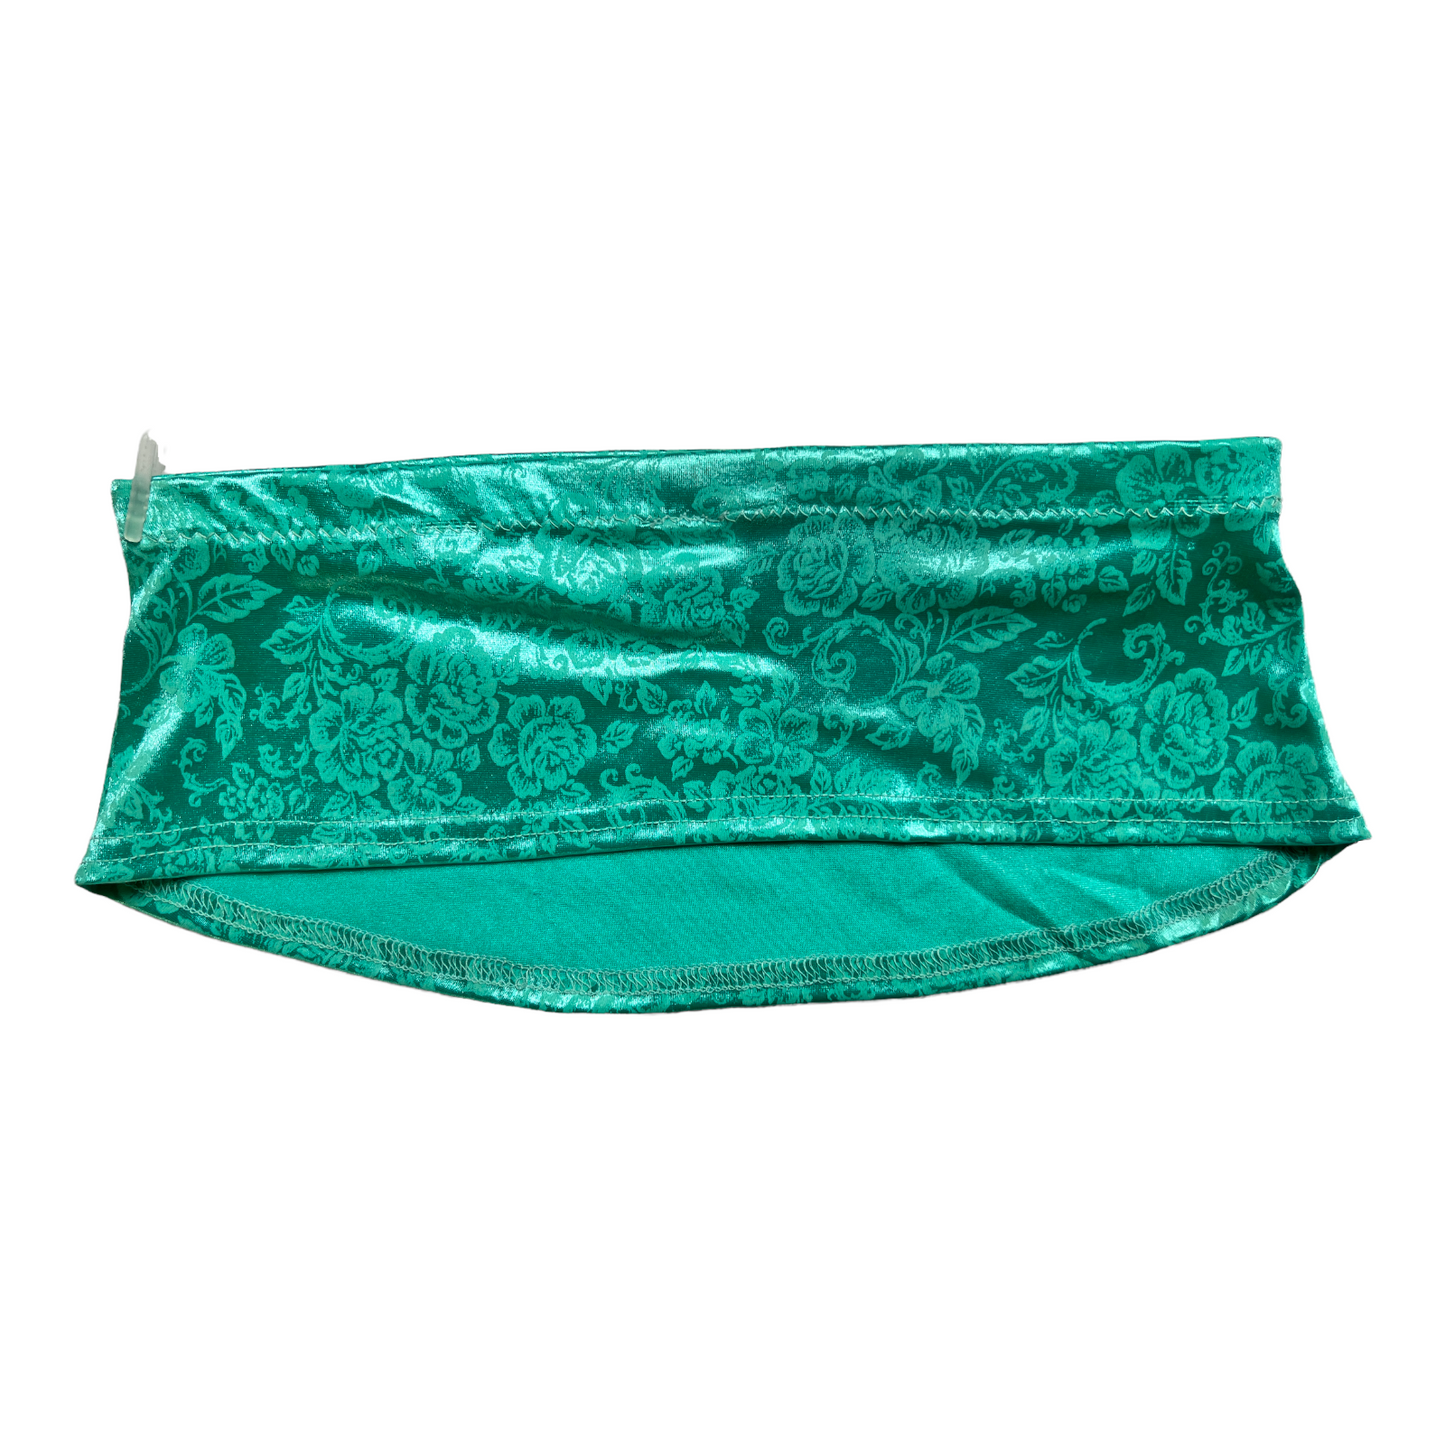 New Turquoise Fancy Breast Cover size L (Swim Wear)